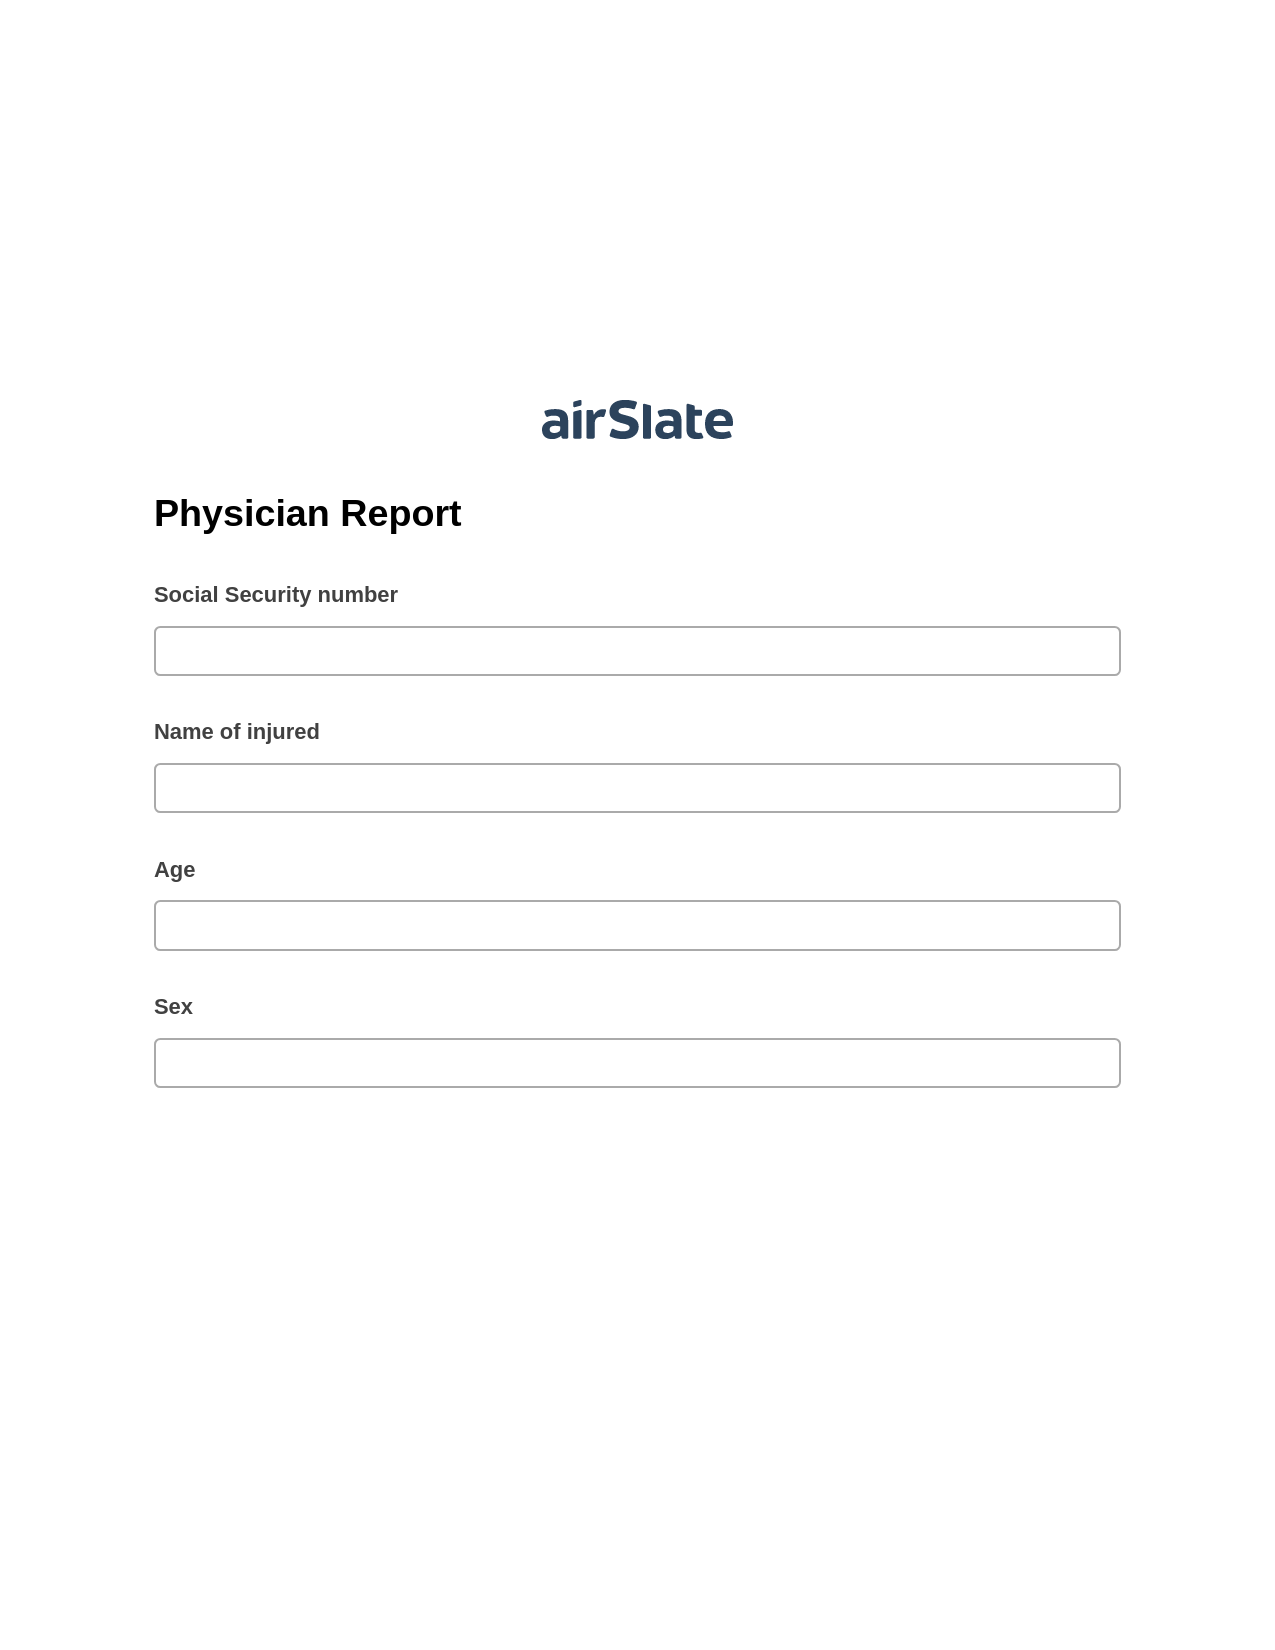 Physician Report Pre-fill from CSV File Bot, Invoke Salesforce Process Bot, Archive to SharePoint Folder Bot